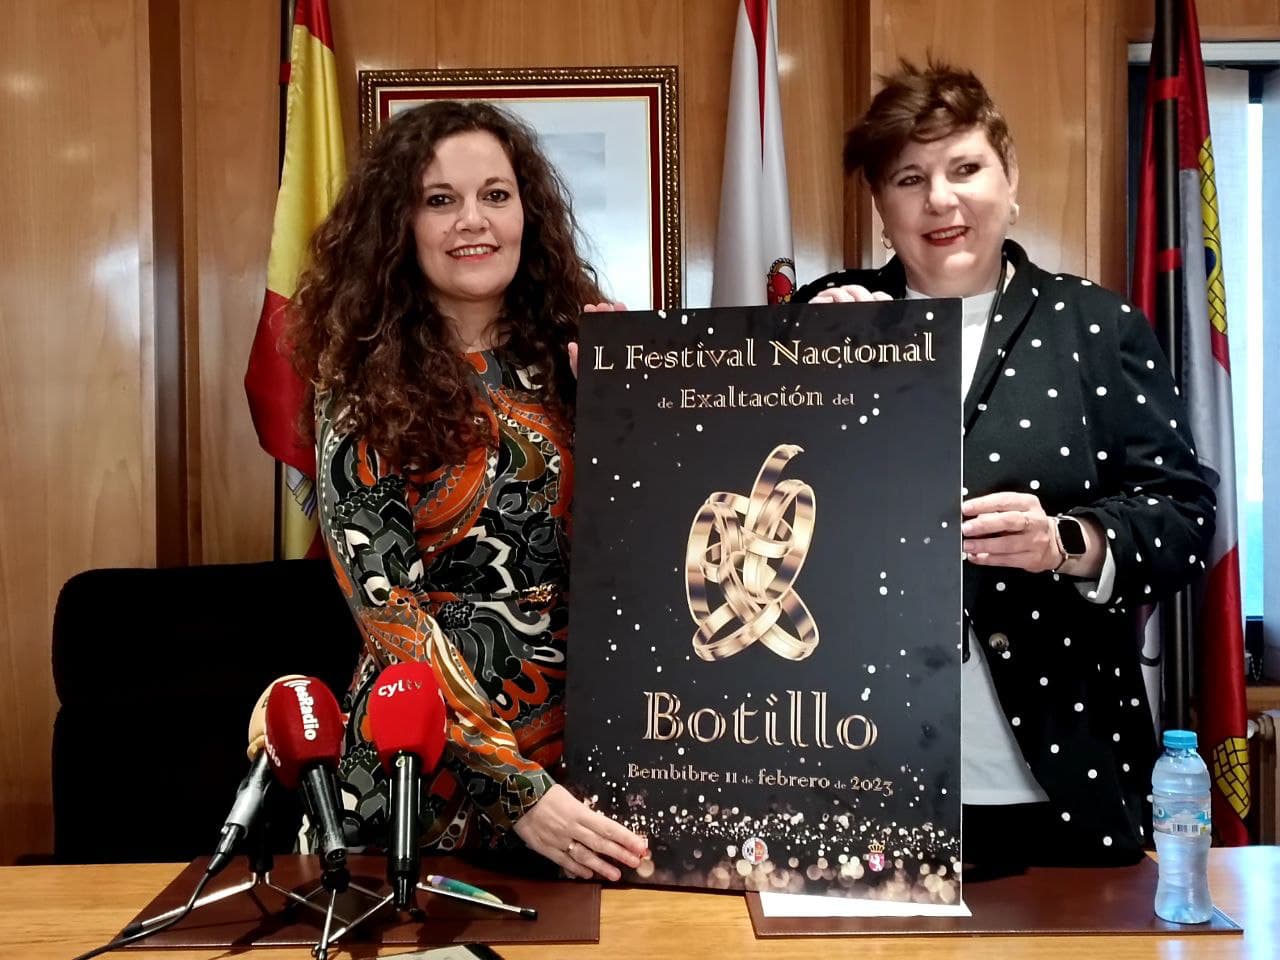 Poster Presentation of the National Festival of Exaltation of the Botillo 2023